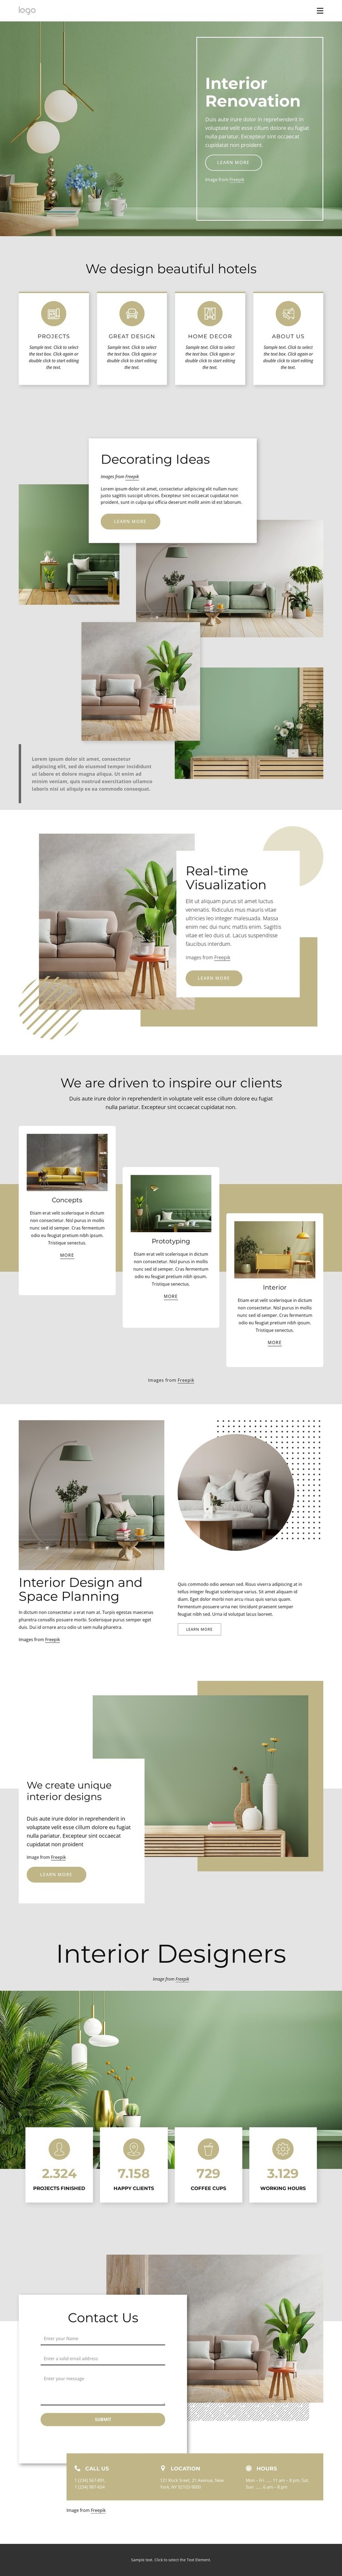 Architecture and interior design agency Web Page Design